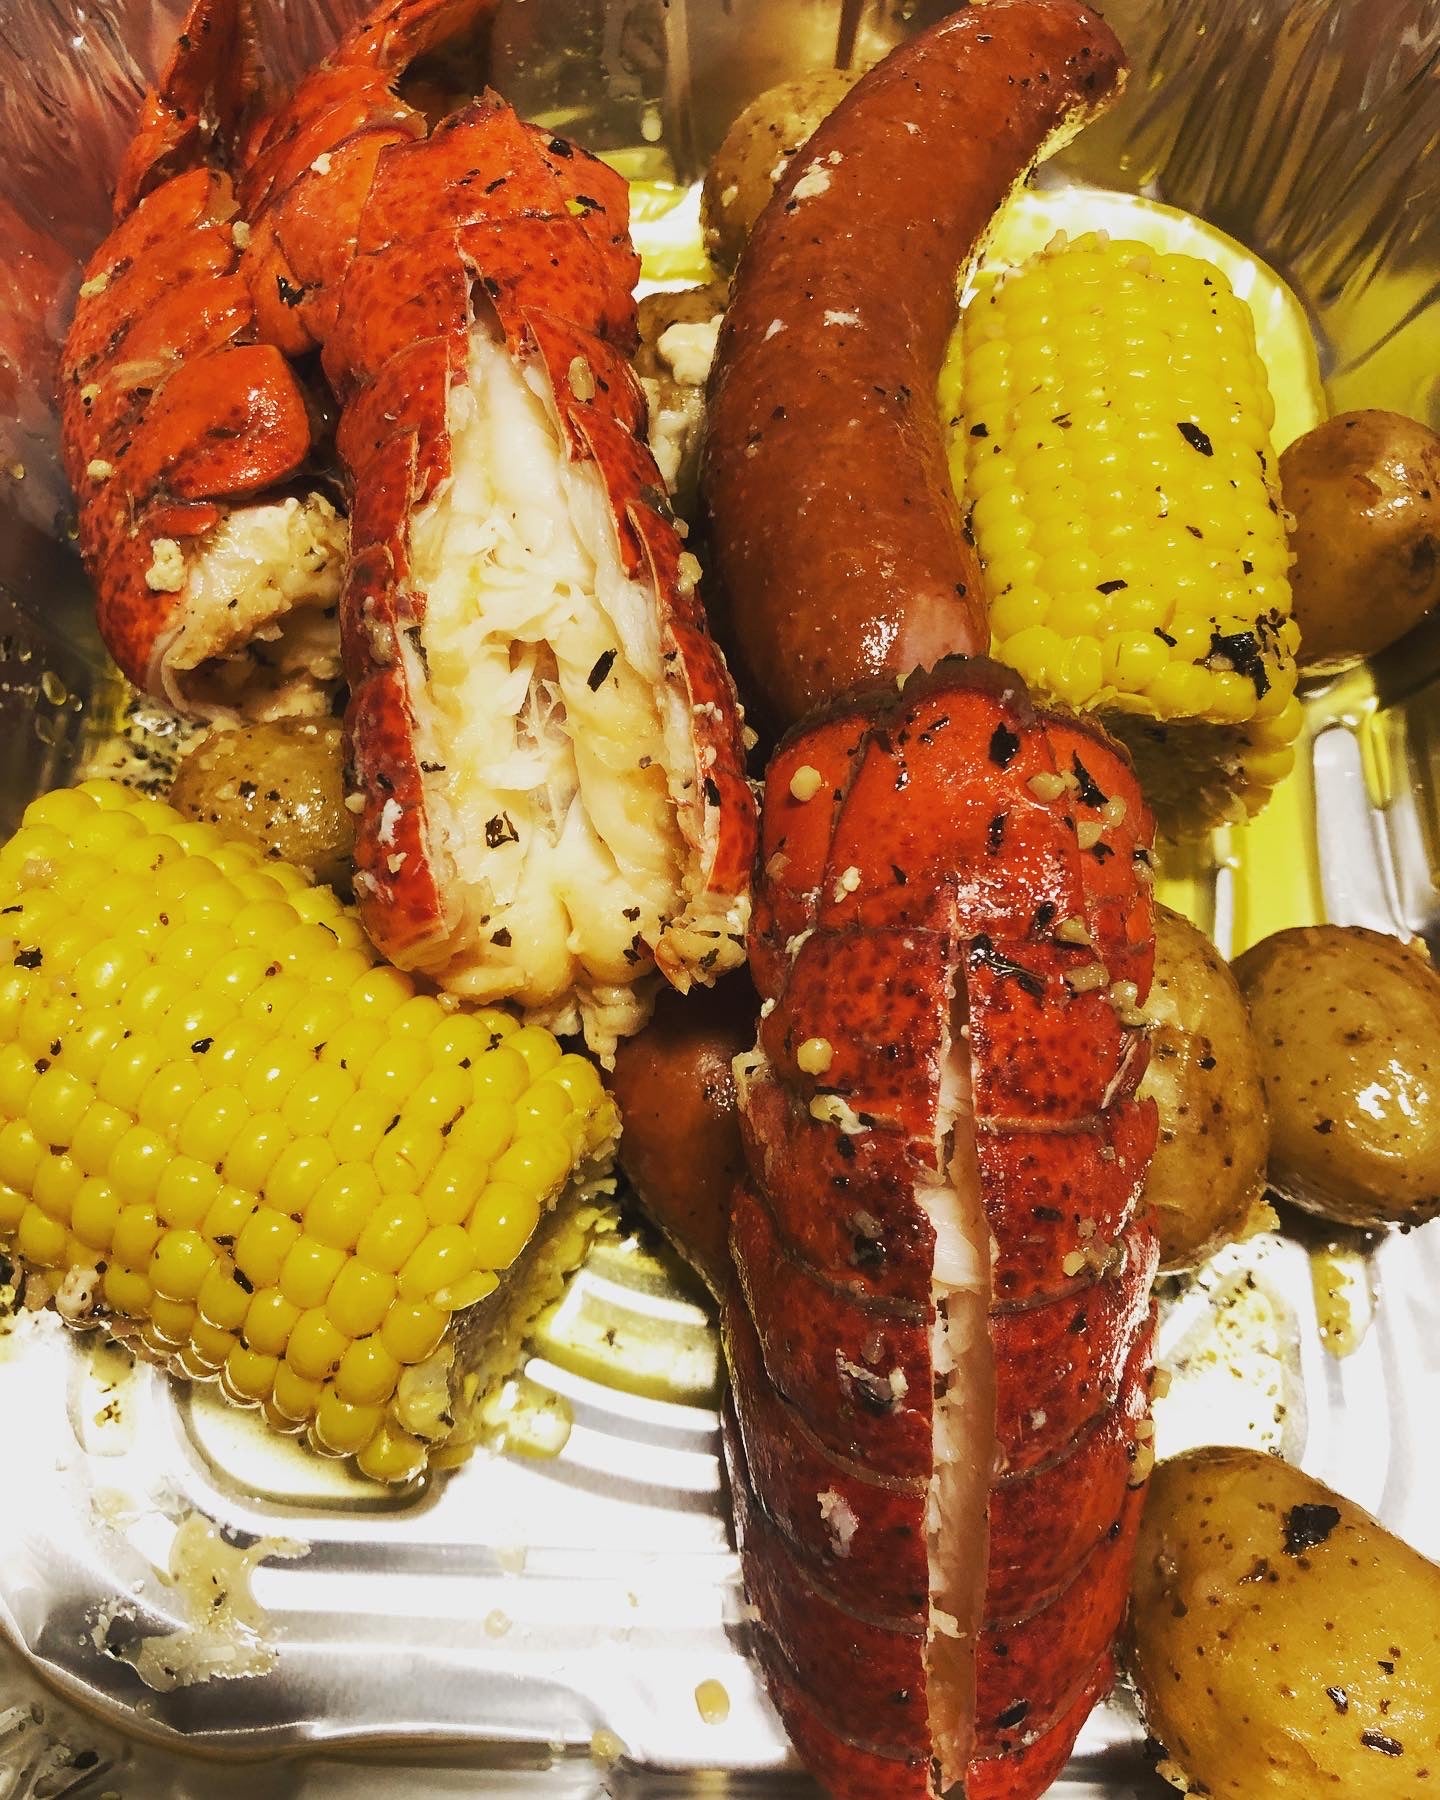 Ramekins, Butter, & Seafood Seasoning Bundle – Alaskan King Crab